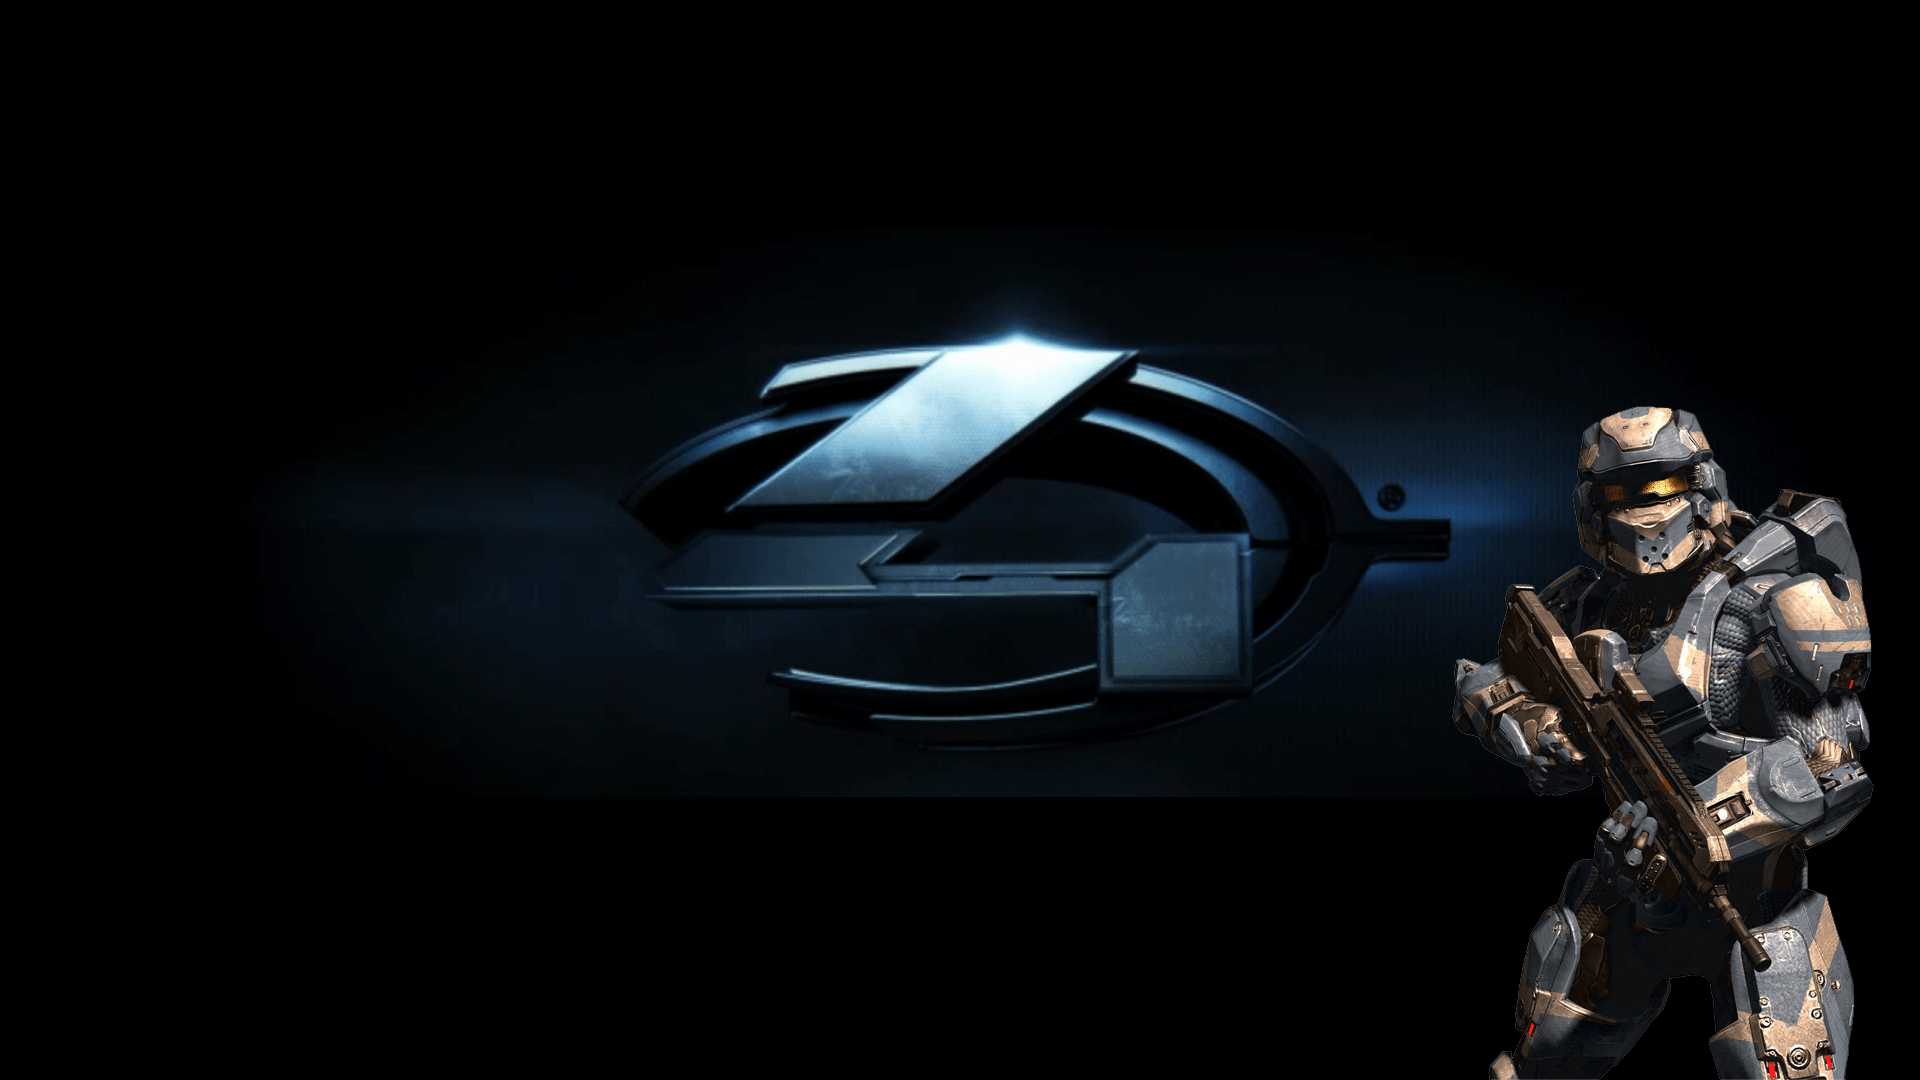 Halo 4 HD Background